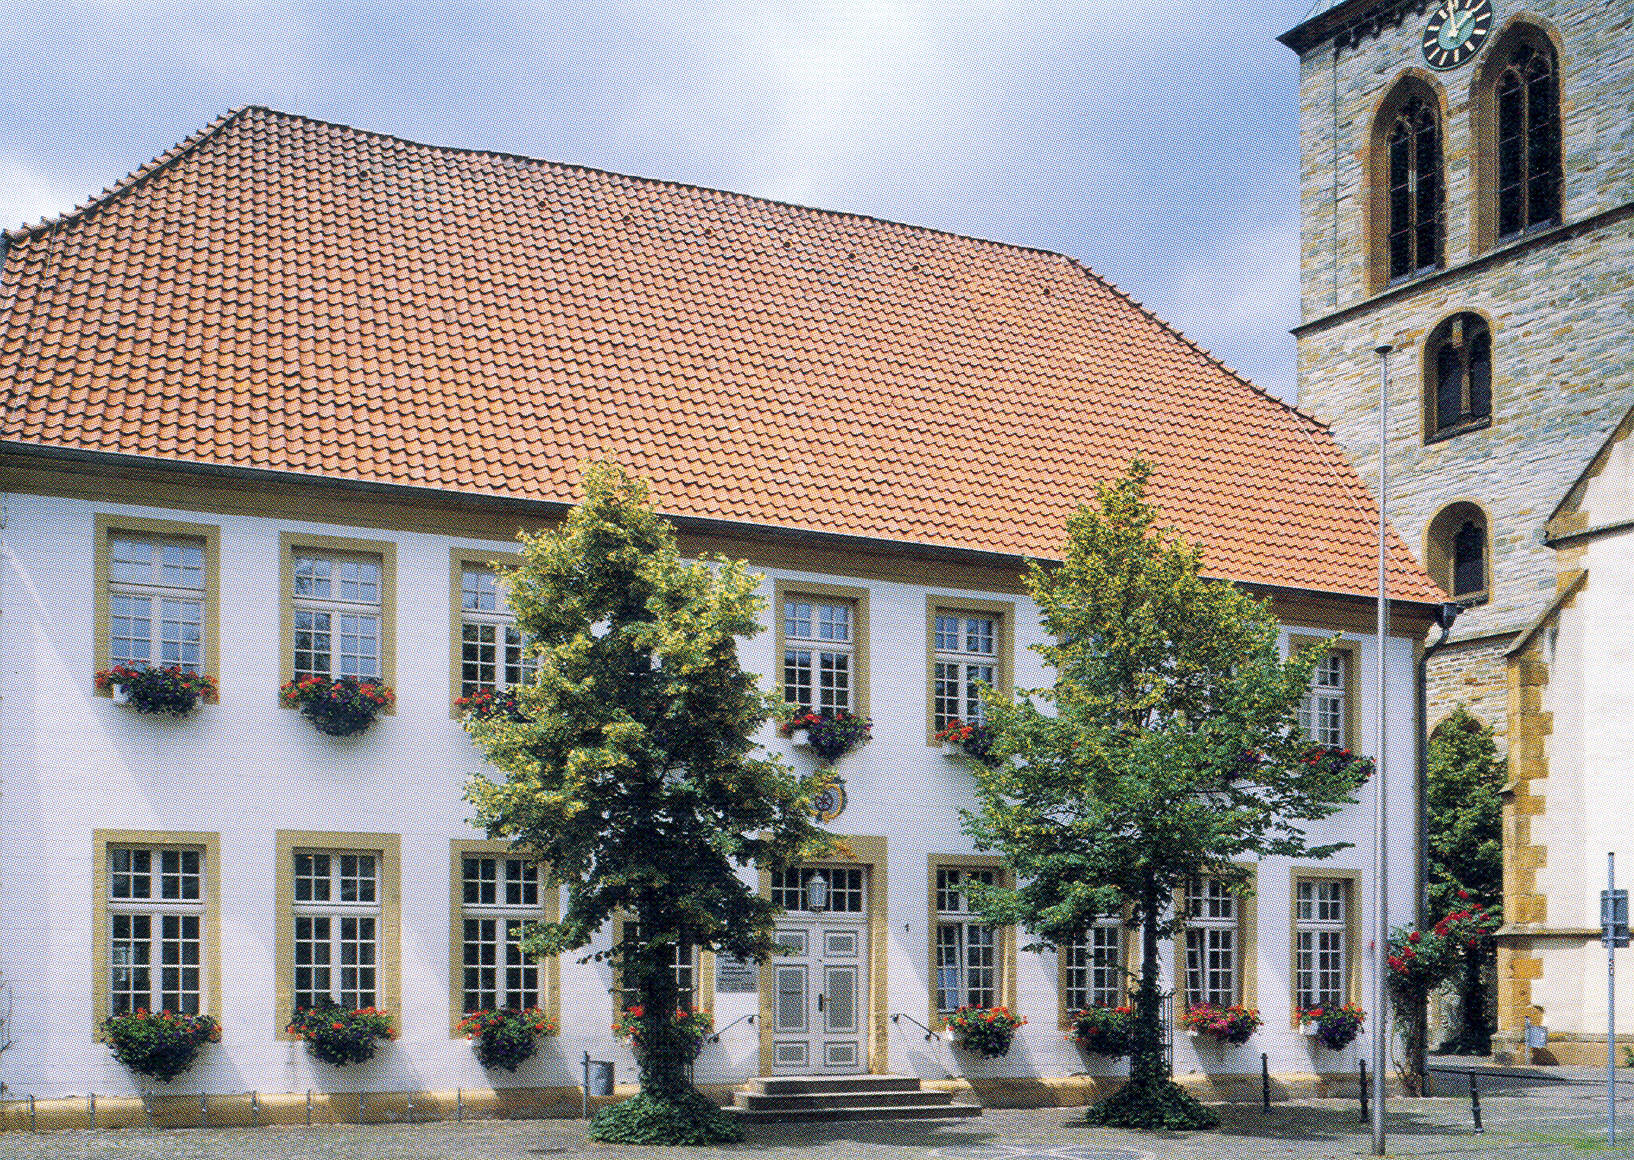 Fassade des Historischen Rathauses Wiedenbrück